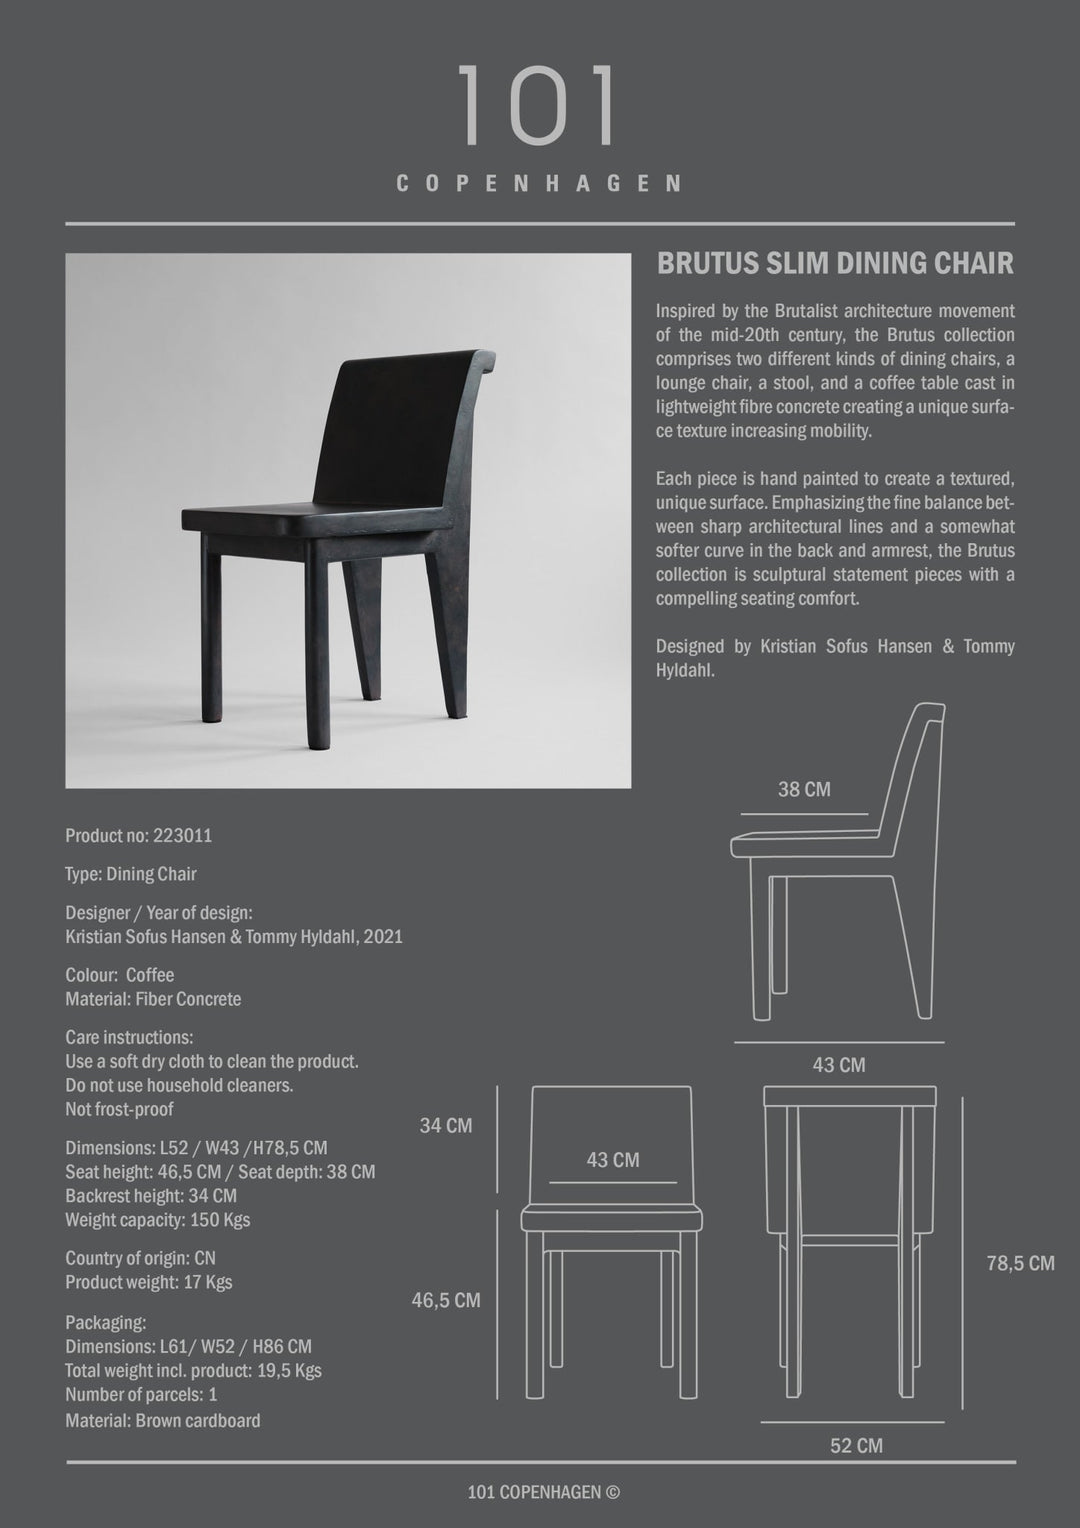 101 Copenhagen Brutus Slim Dining Chair - Coffee - $995.00